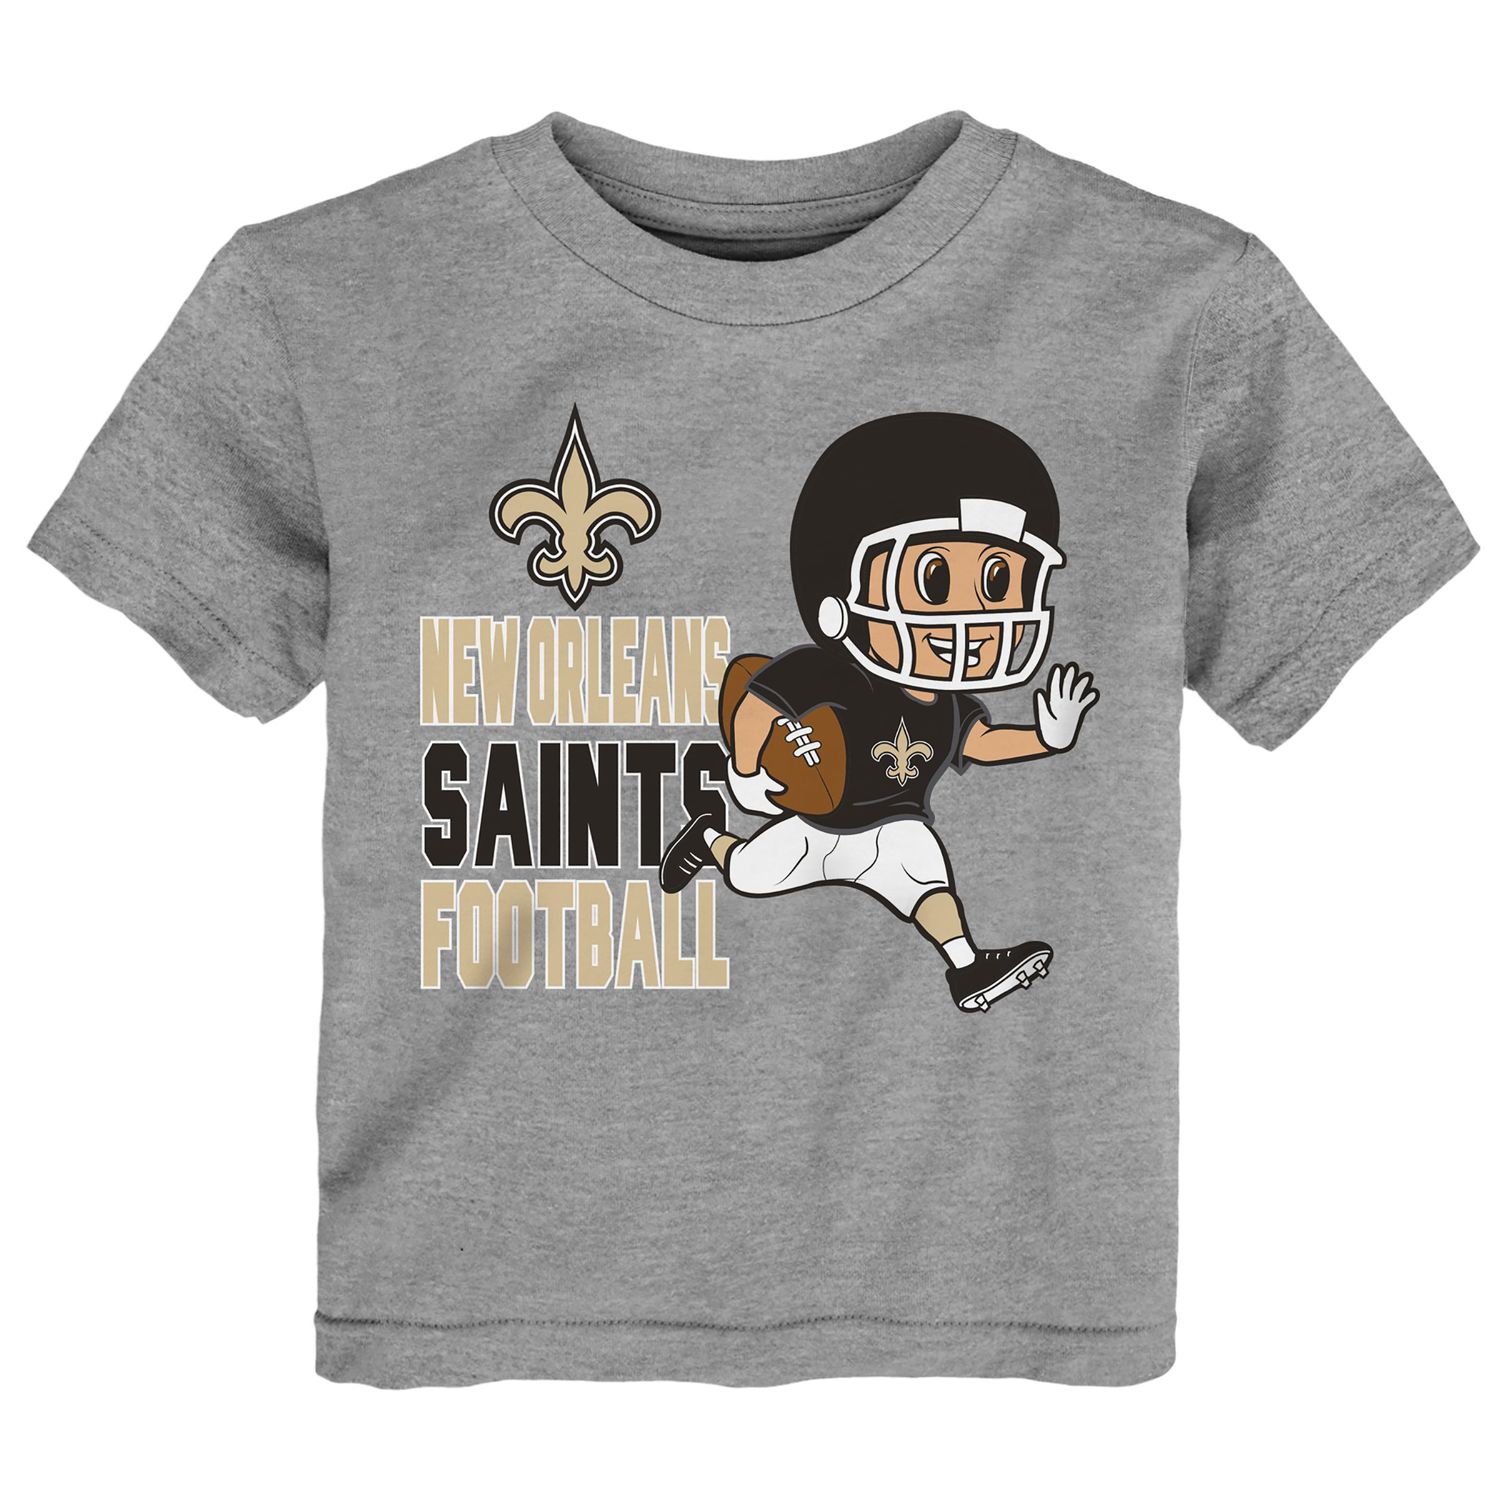 toddler saints t shirt